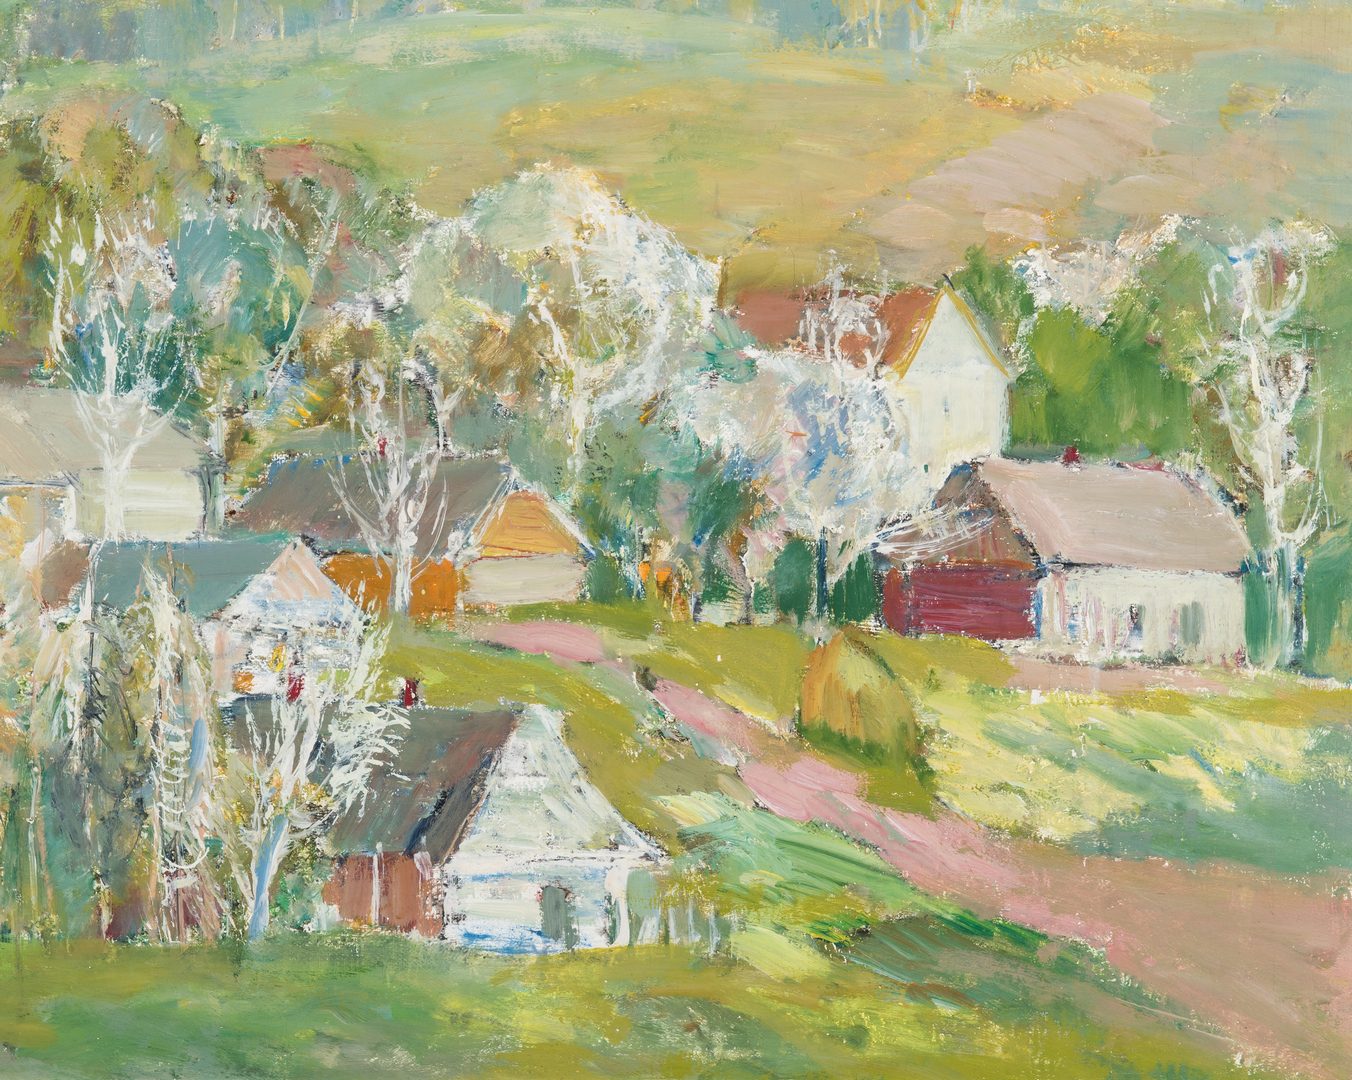 Lot 82: Henryk Krych O/C Painting, Impressionistic Landscape